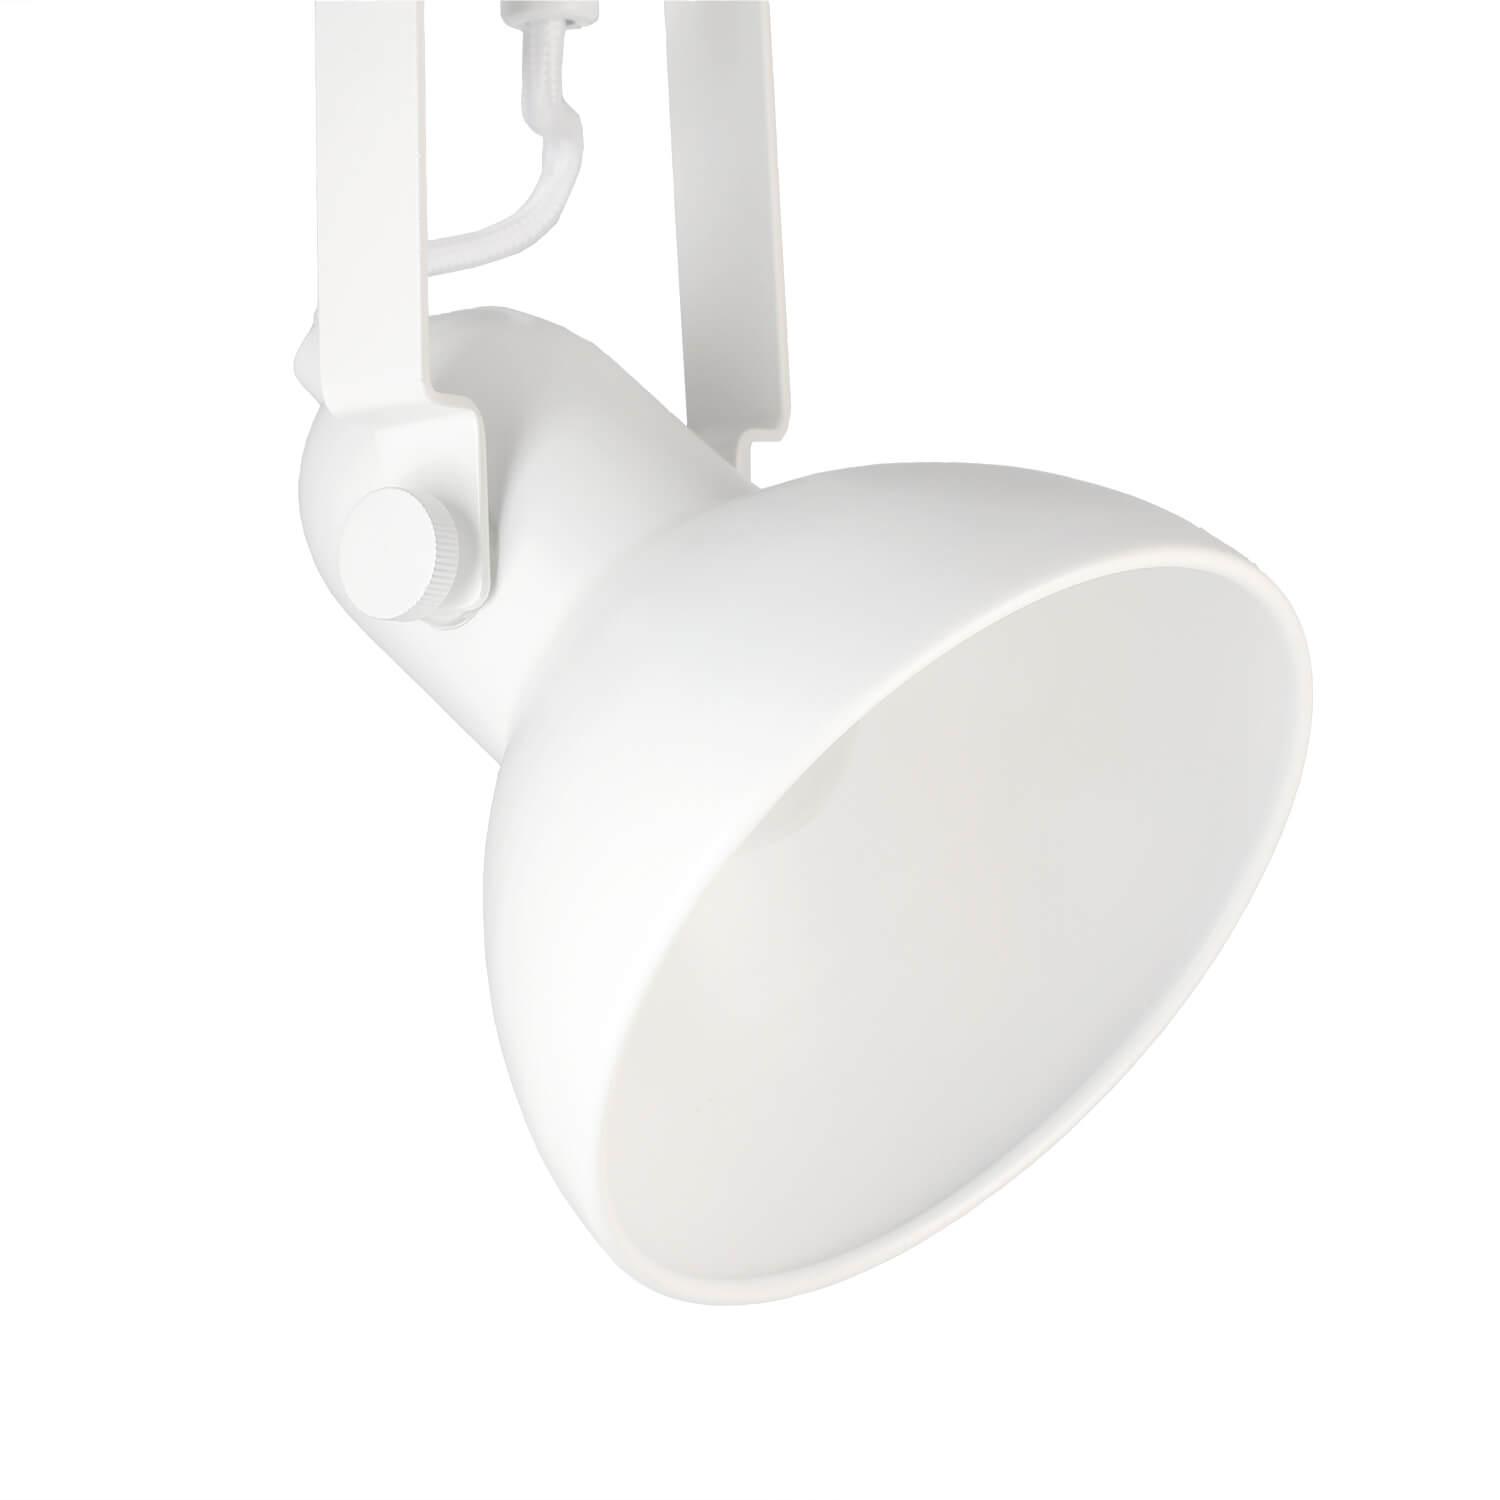 Weiße Spot Lampe DALLAS Retro Design E14 verstellbar